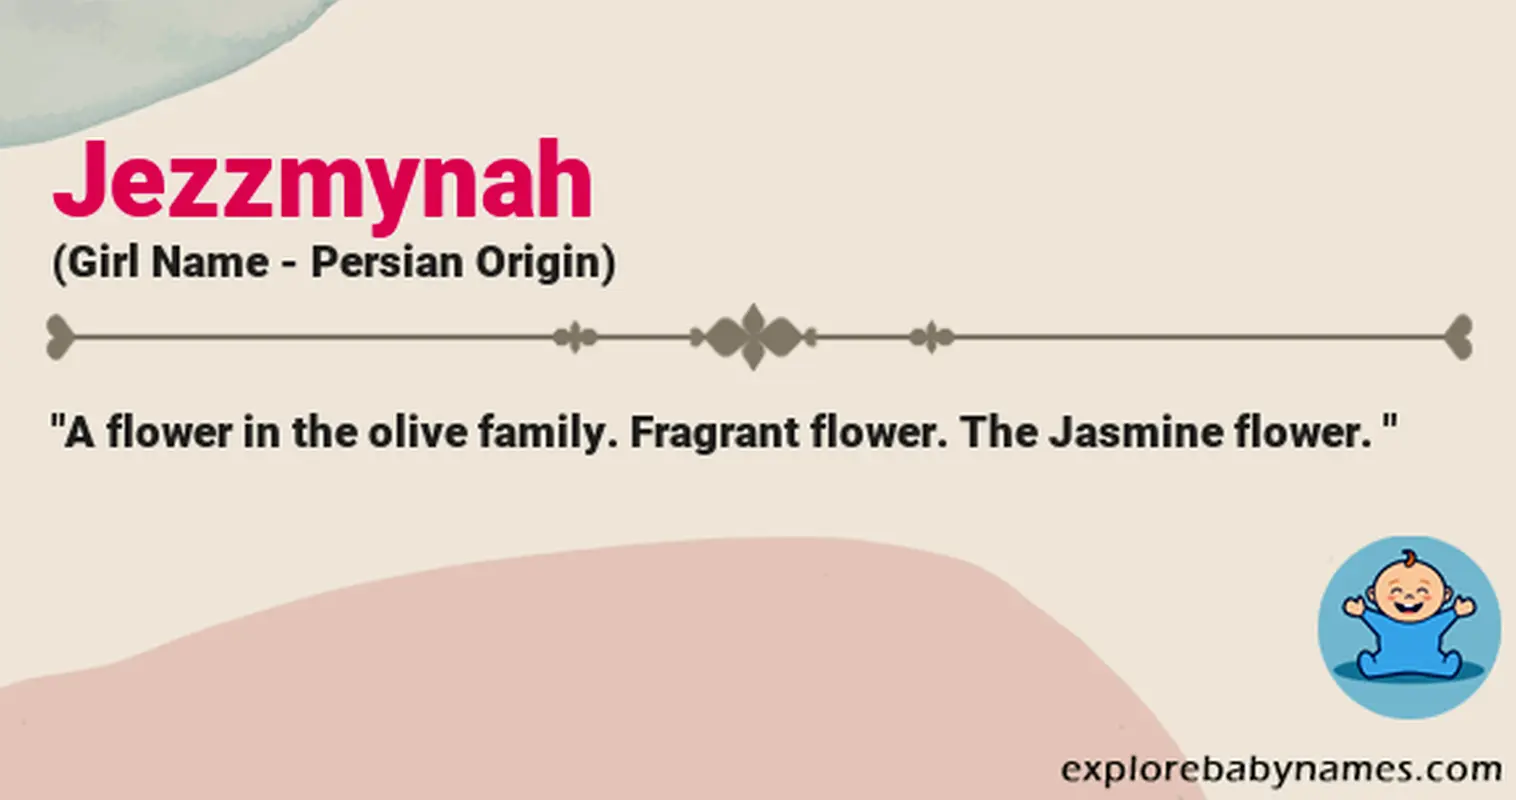 Meaning of Jezzmynah